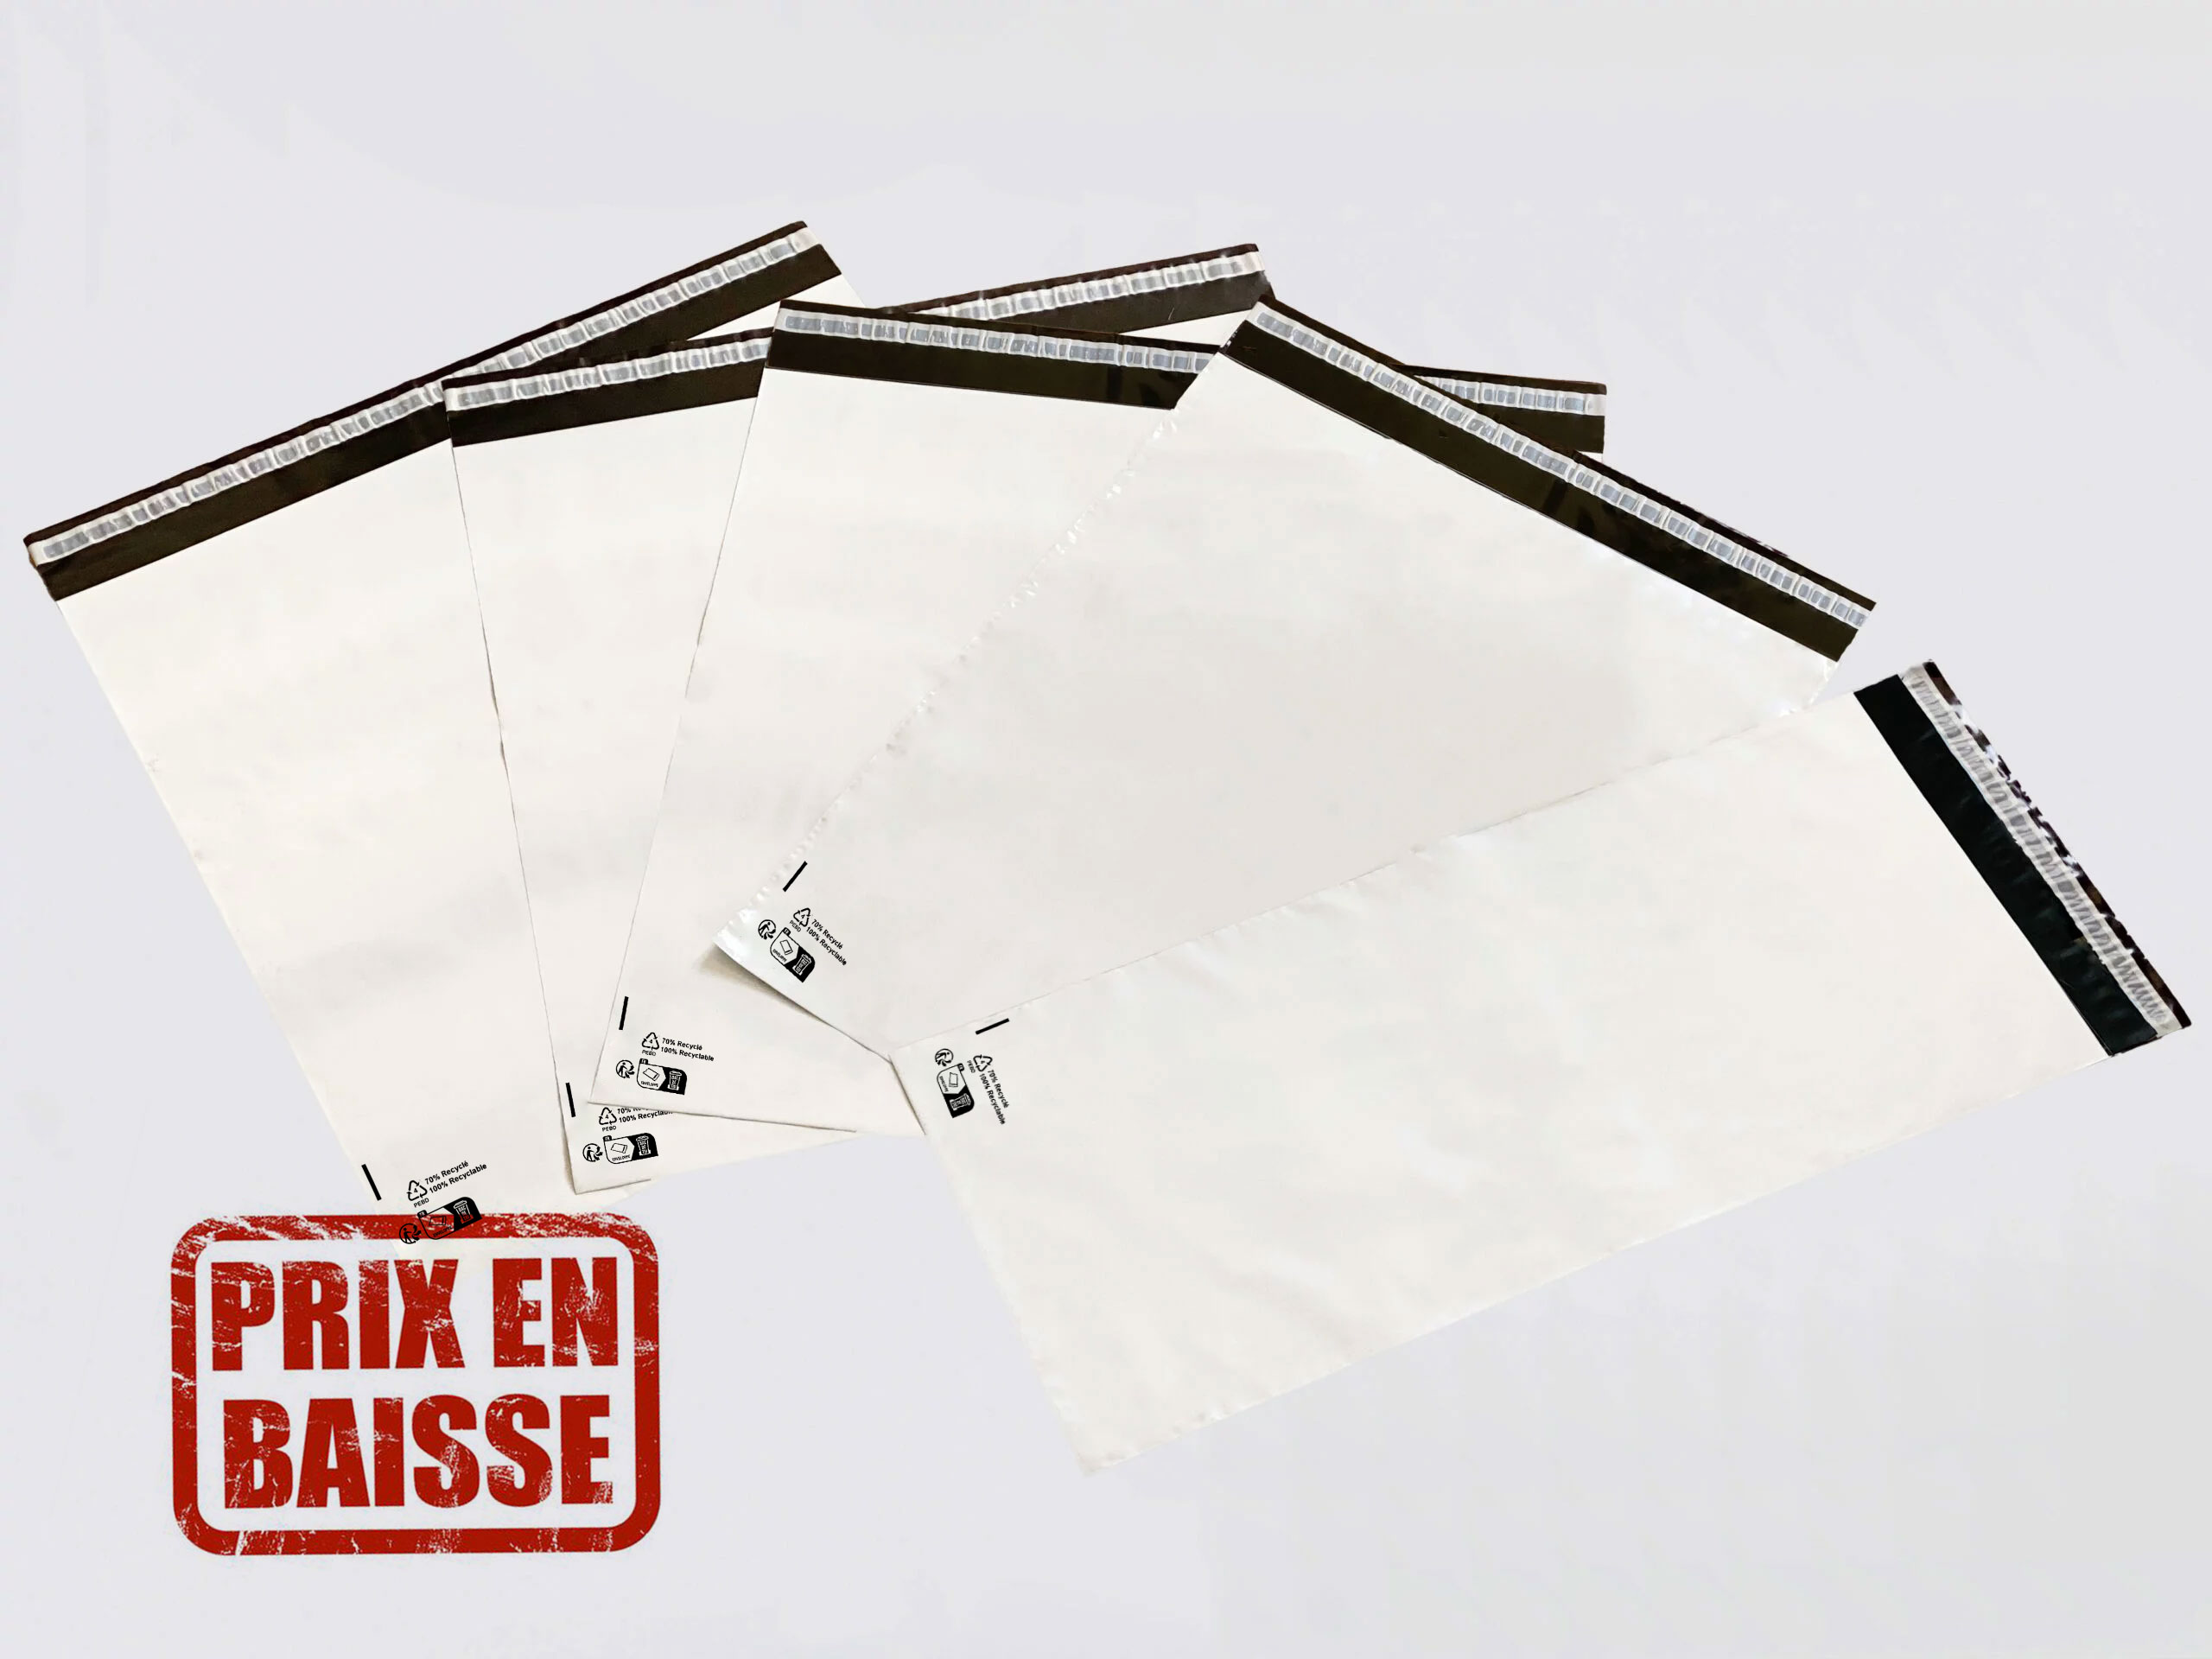 50 Enveloppes plastique opaques VAD/VPC 300x700mm - Harry plast